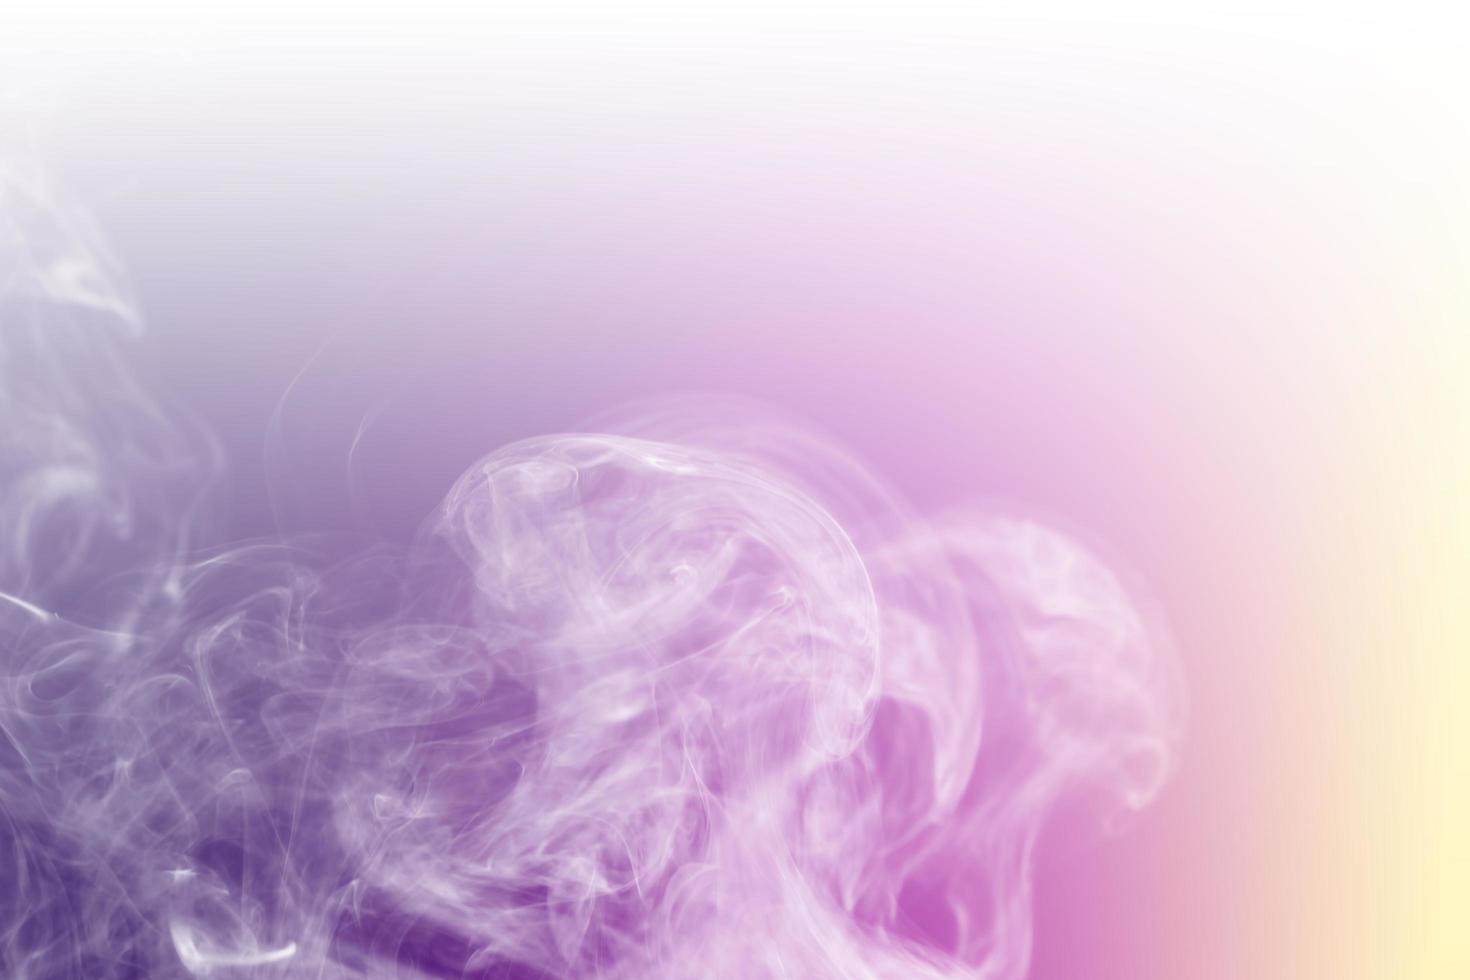 colored smoke isolated on white background photo